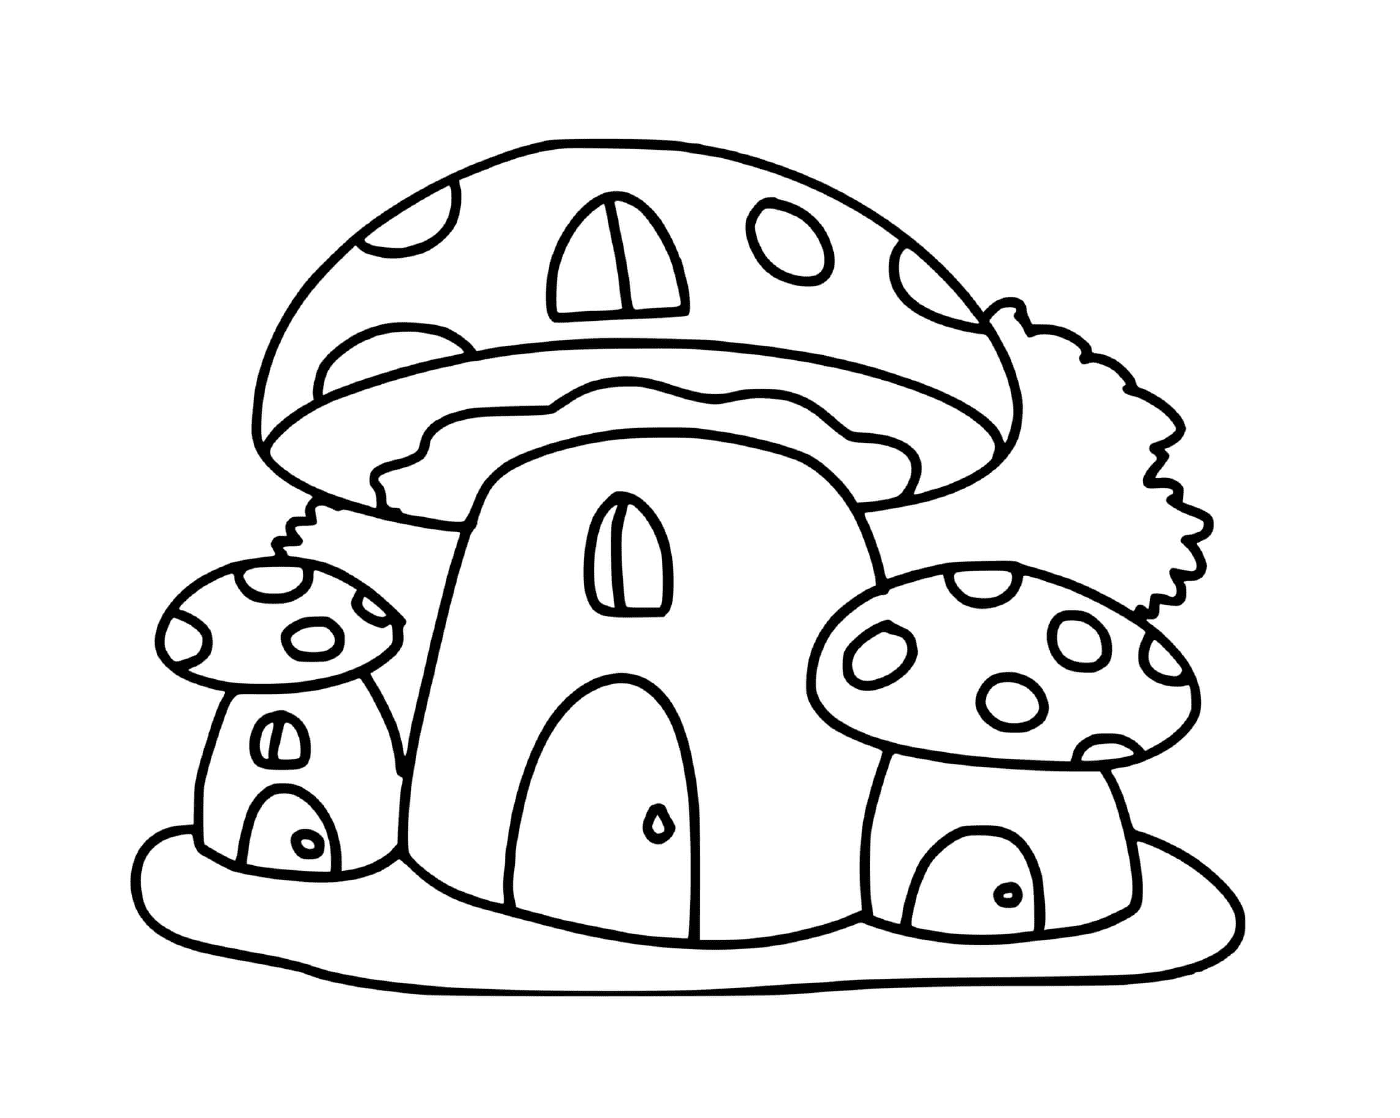  Fungus-shaped houses, a magical scene 